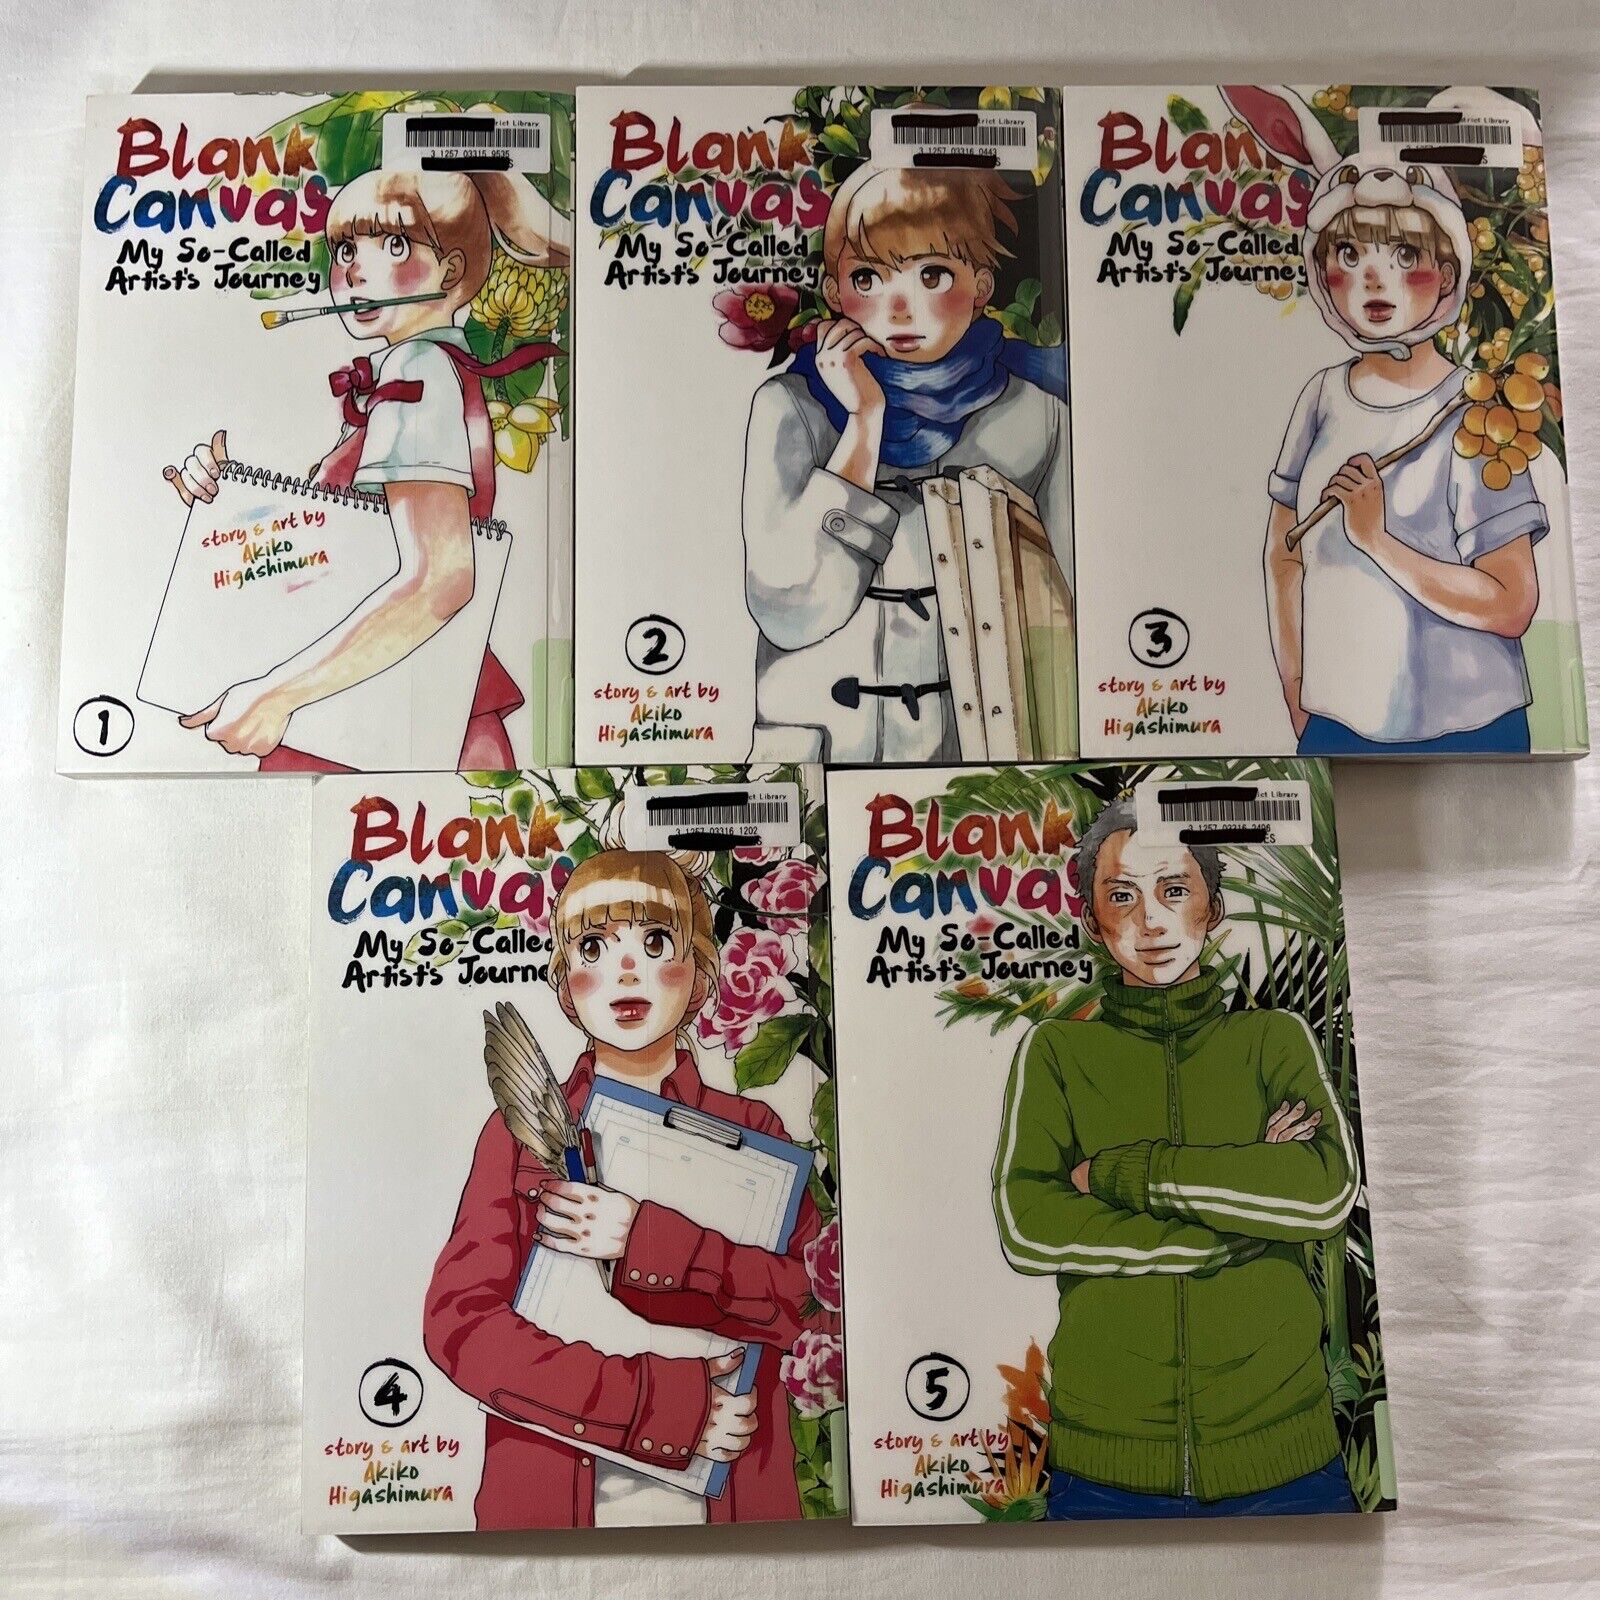 Blank Canvas: My so-Called Artist’s Journey Manga Vol 1-5 English Complete Set